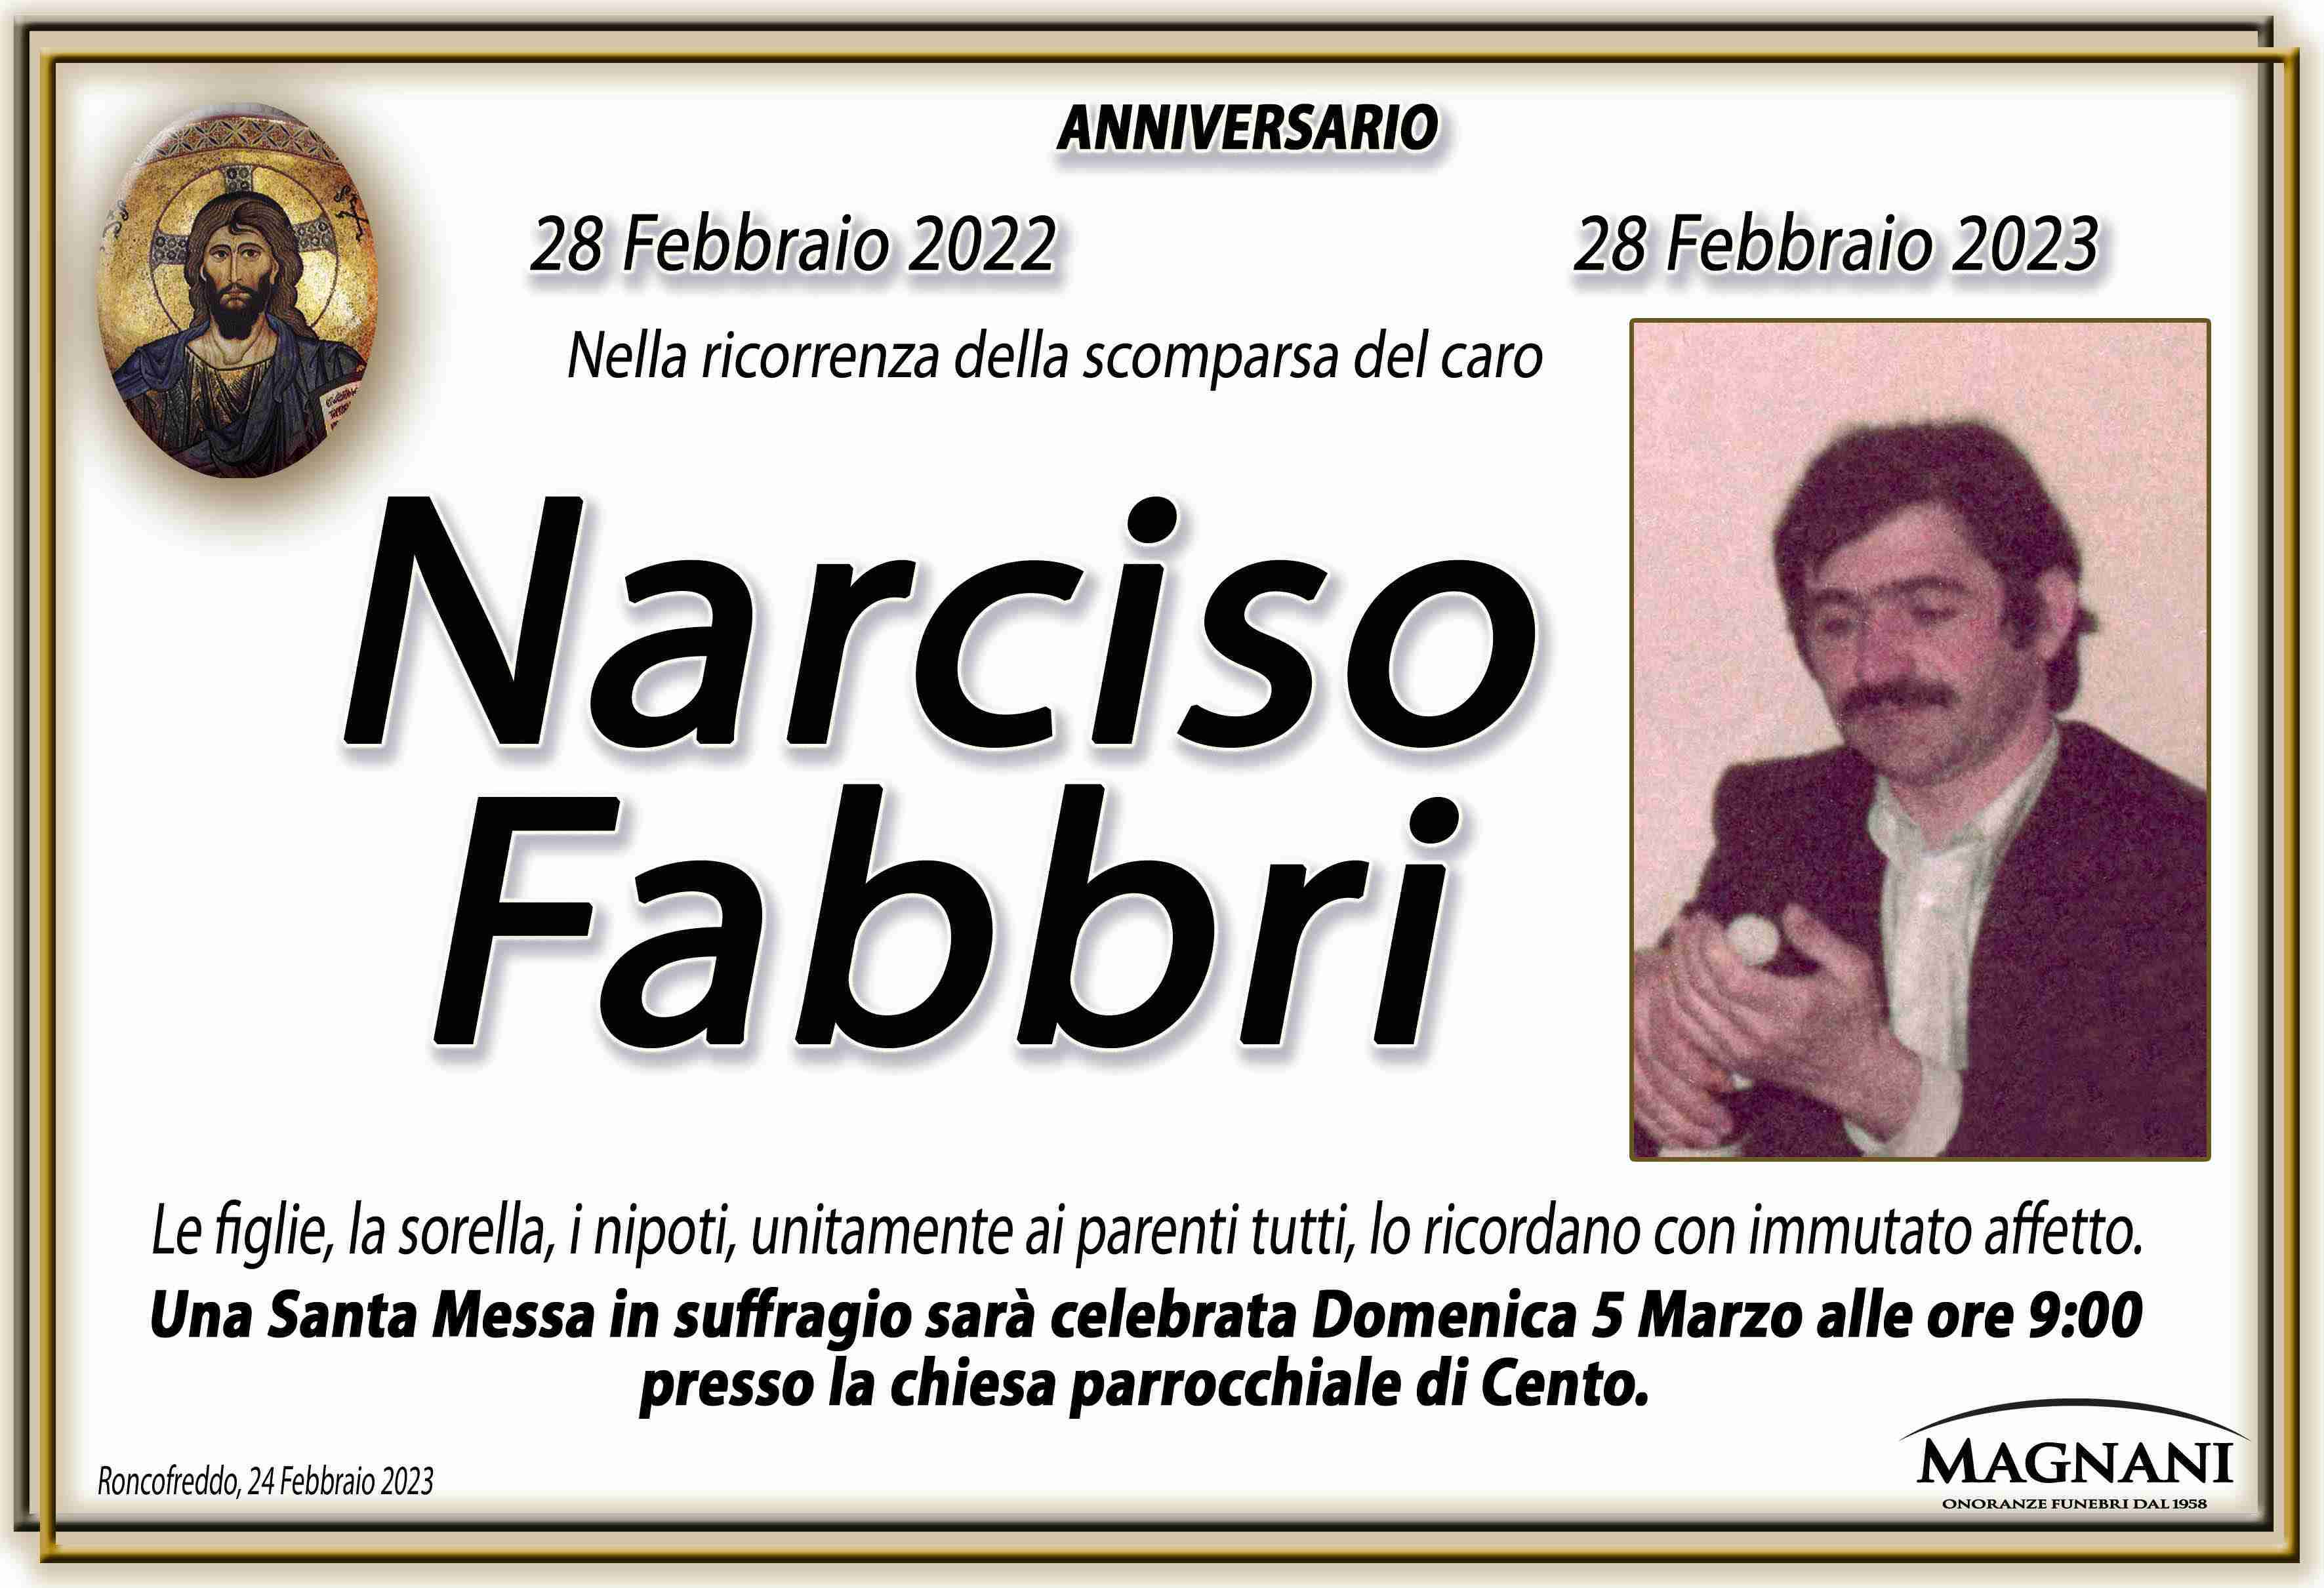 Narciso Fabbri